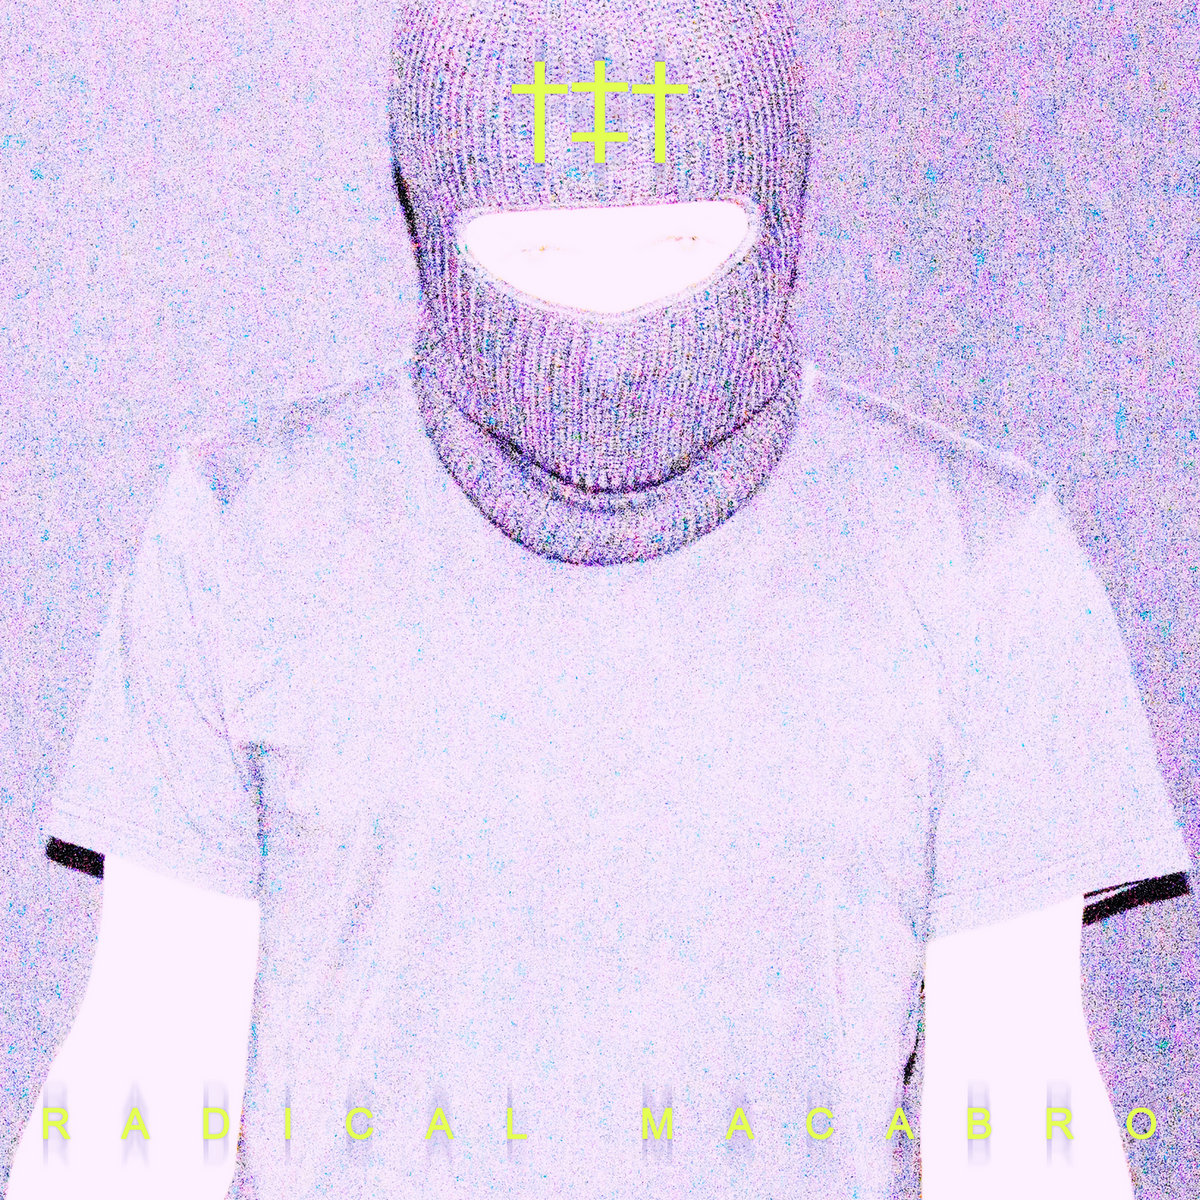 Ritualz, “Radical Macabro”